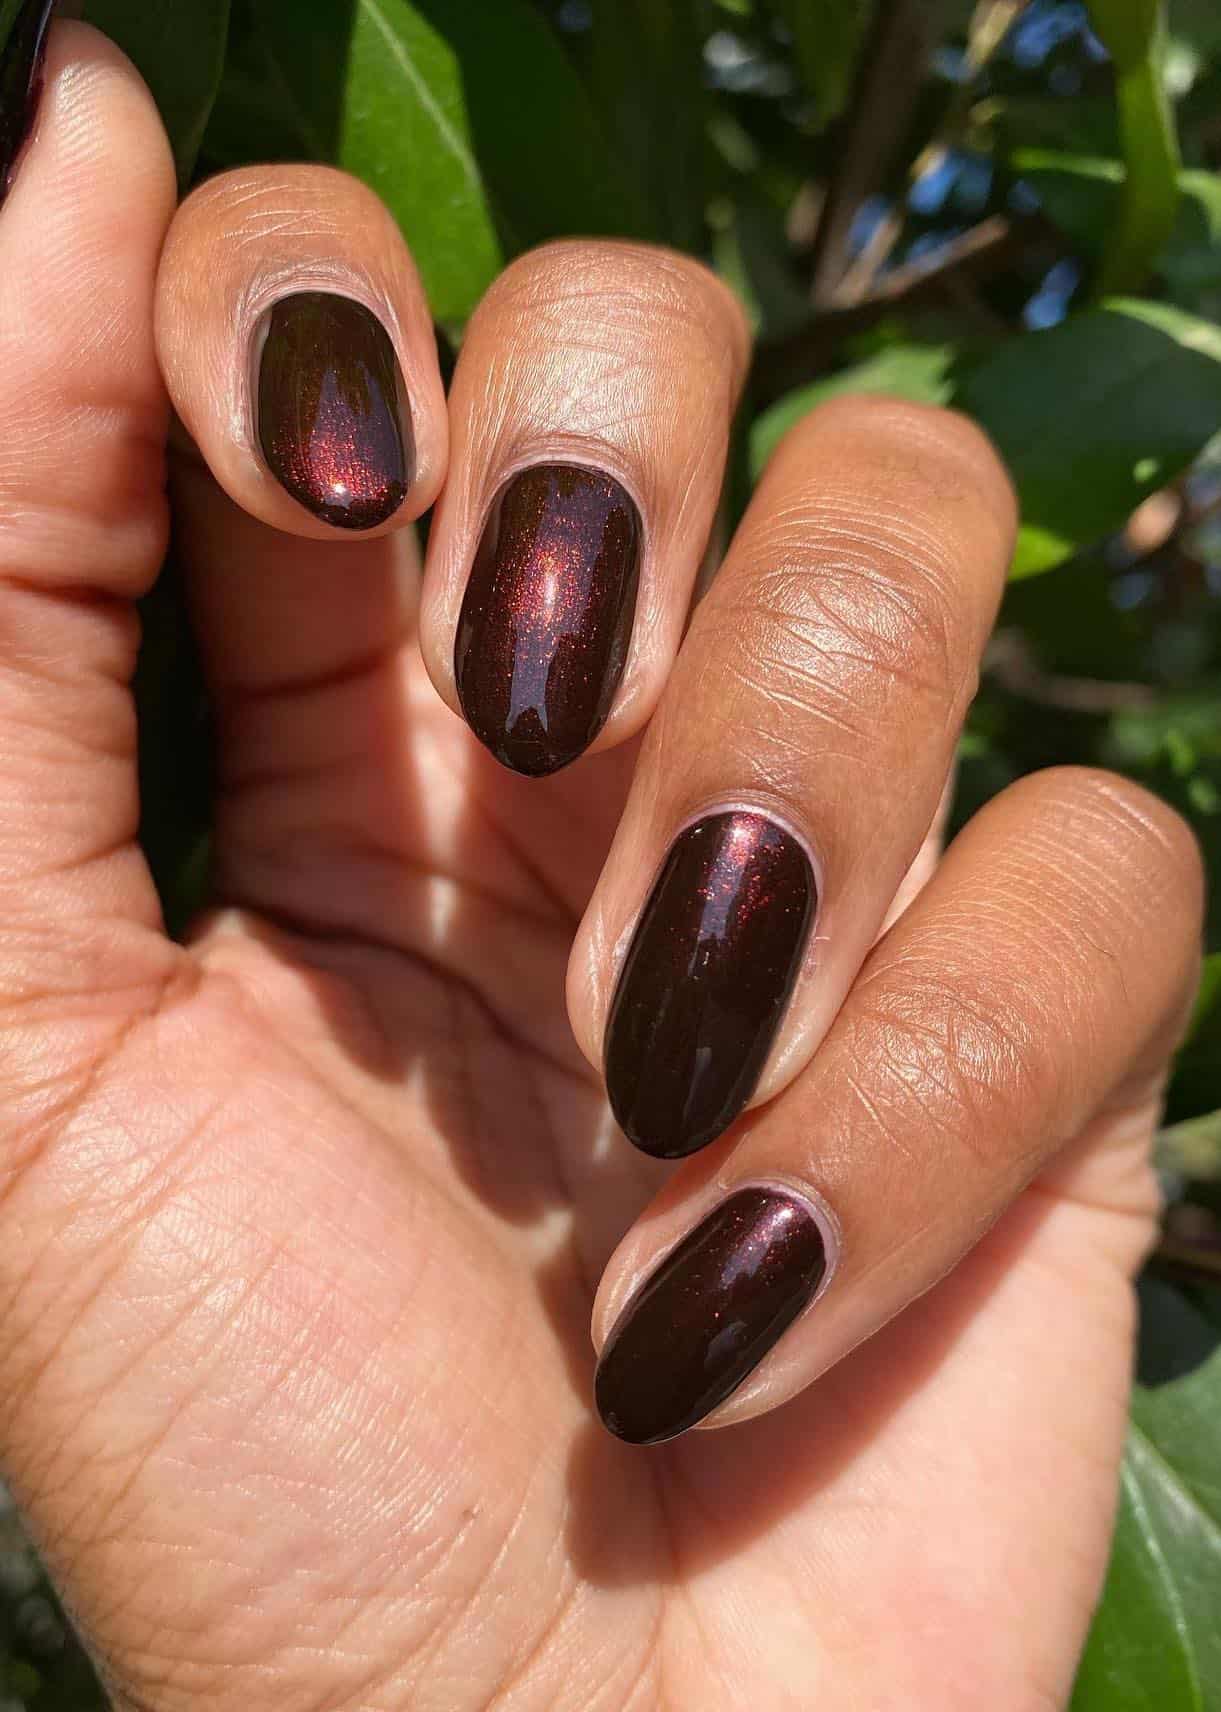 Brown Nail Polish on the Nails. Stock Image - Image of improve, beautiful:  63786157